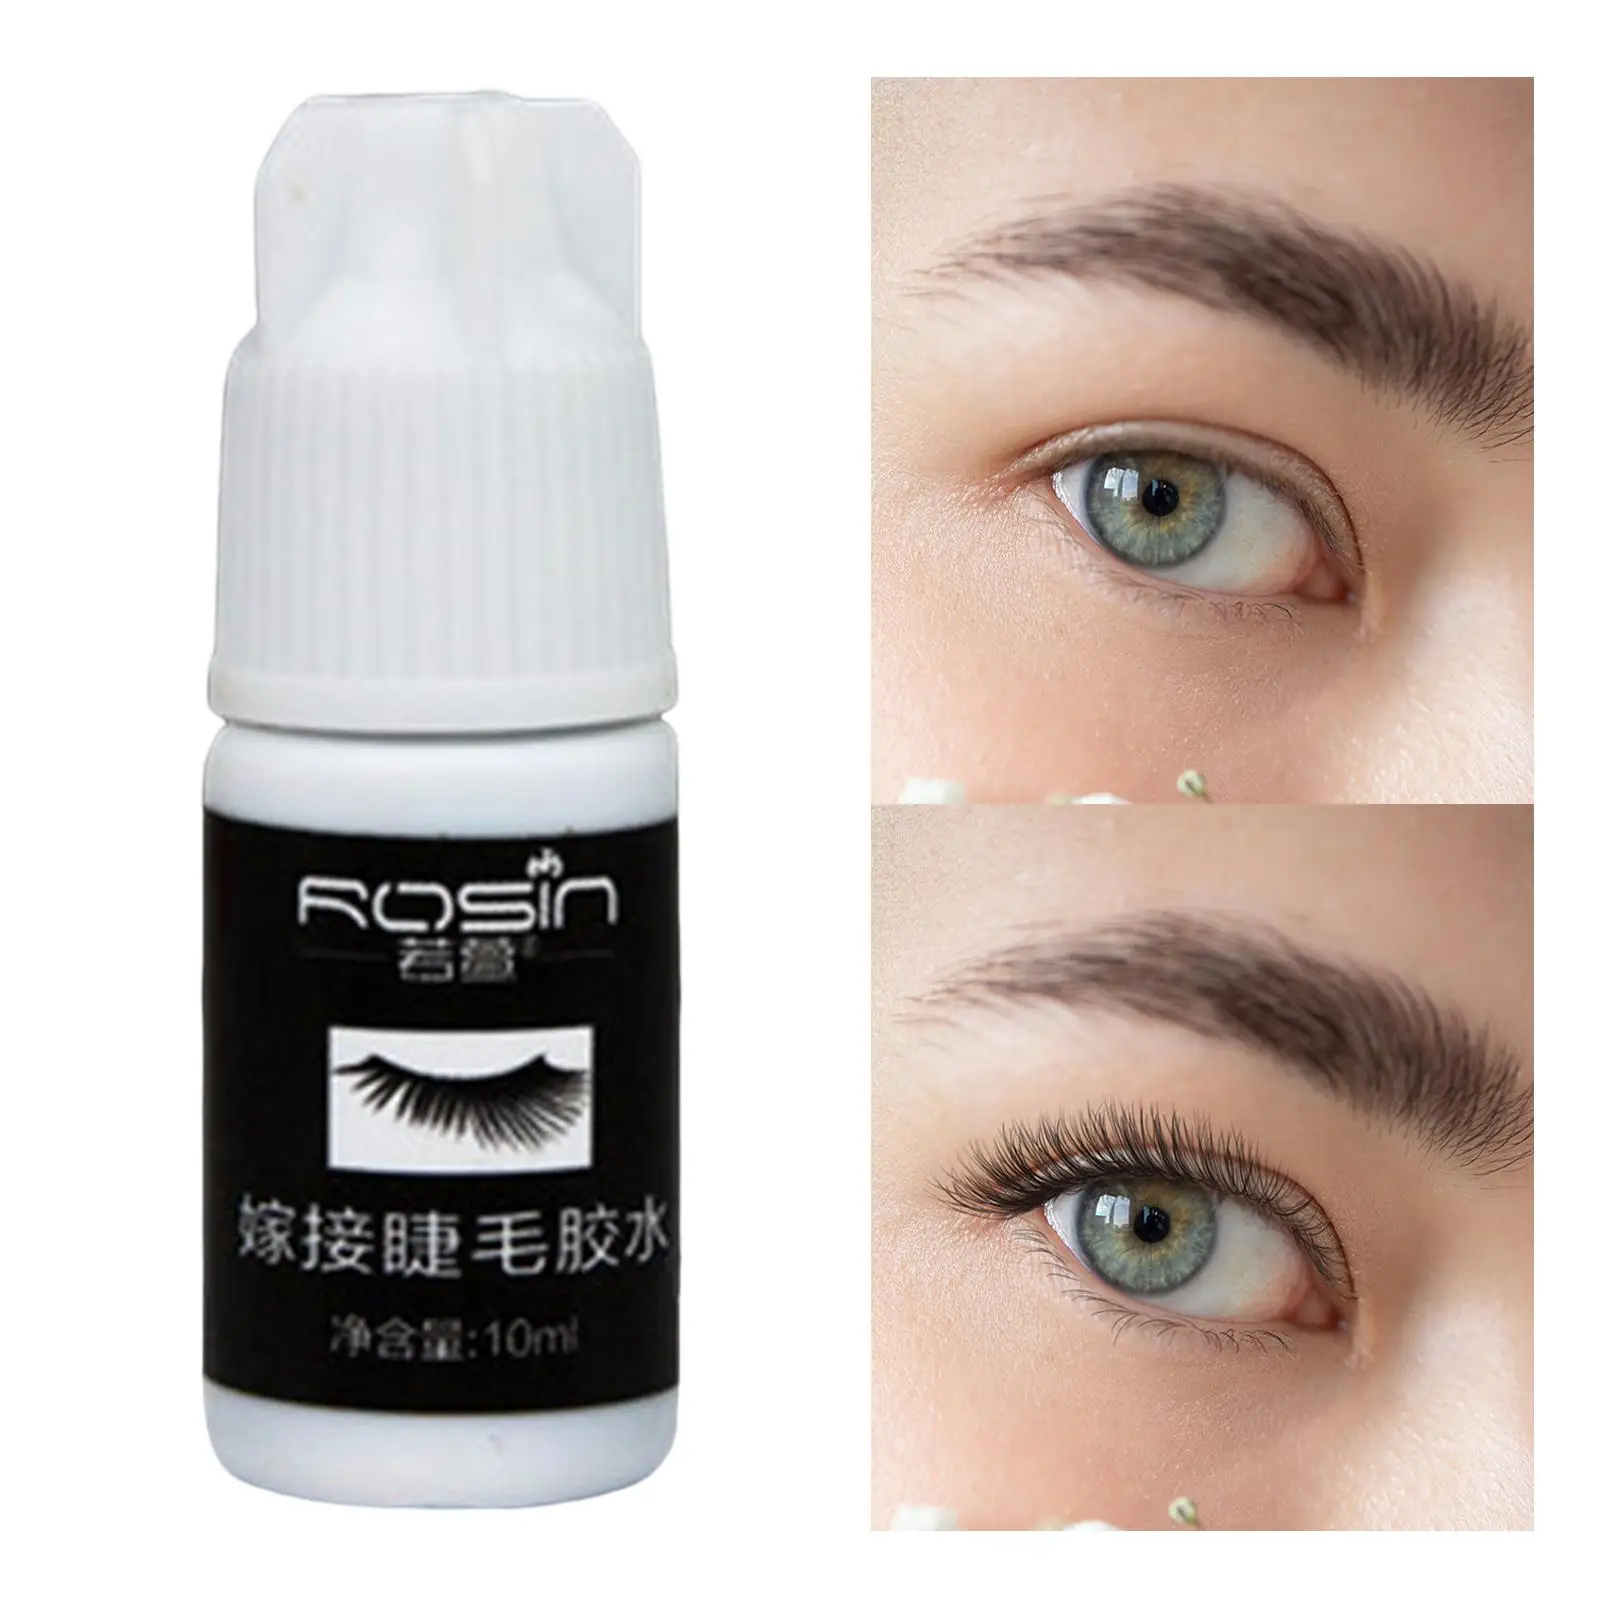 

Sensitive Eyelash Extension Glue Maximum Bonding Lash Extension Glue for Individual Cluster Lashes DIY Professional Use